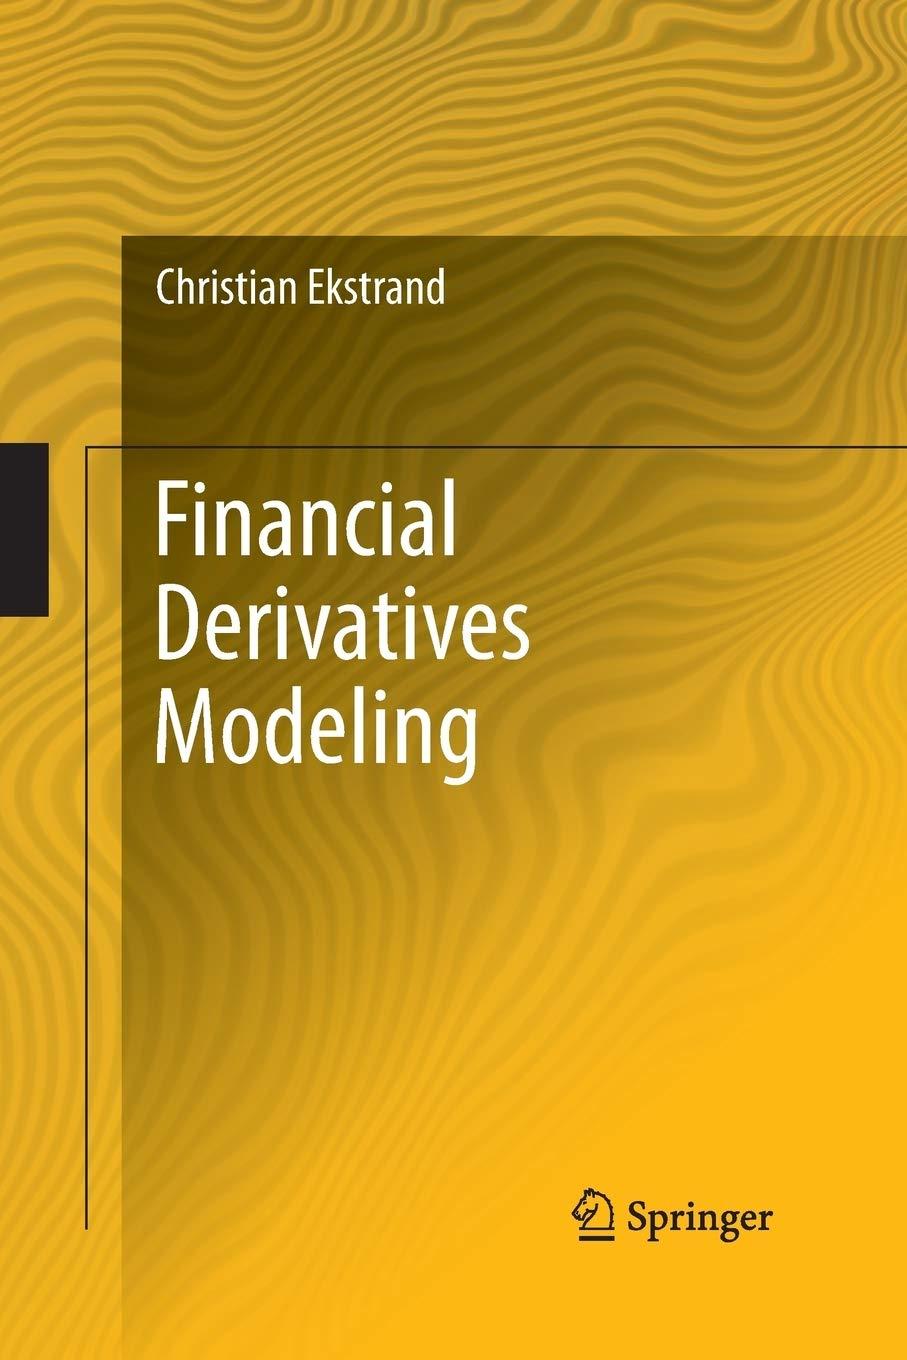 financial derivatives modeling 2011th edition christian ekstrand 3642444369, 978-3642444364